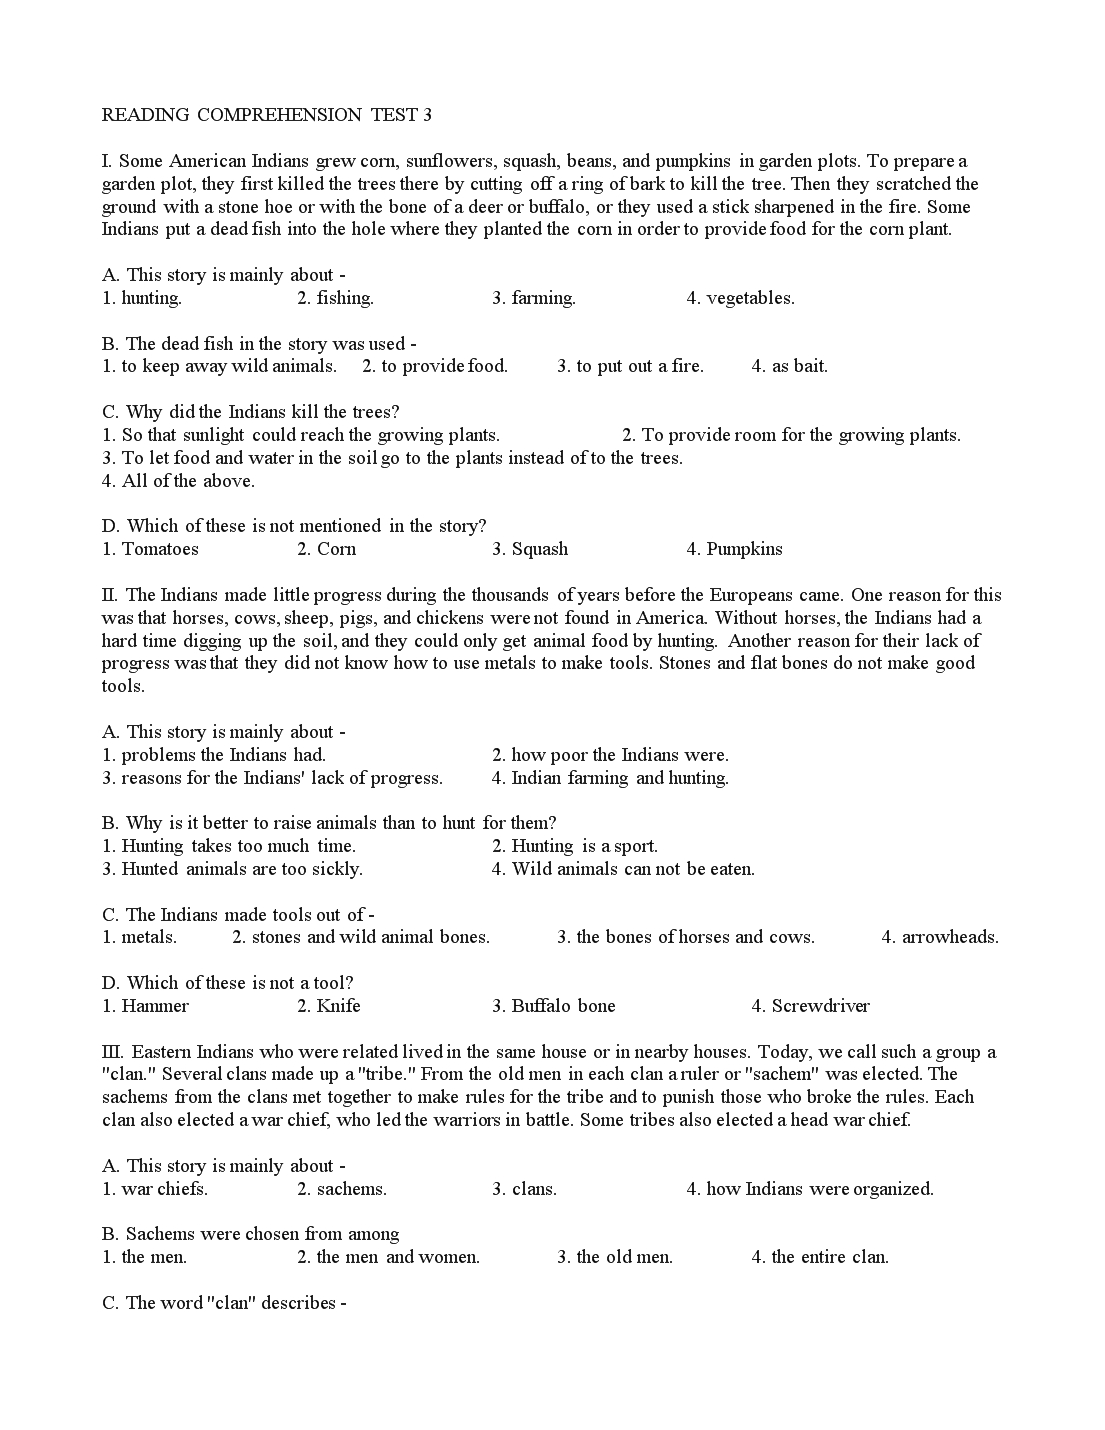 Reading comprehension test 1 trang 5